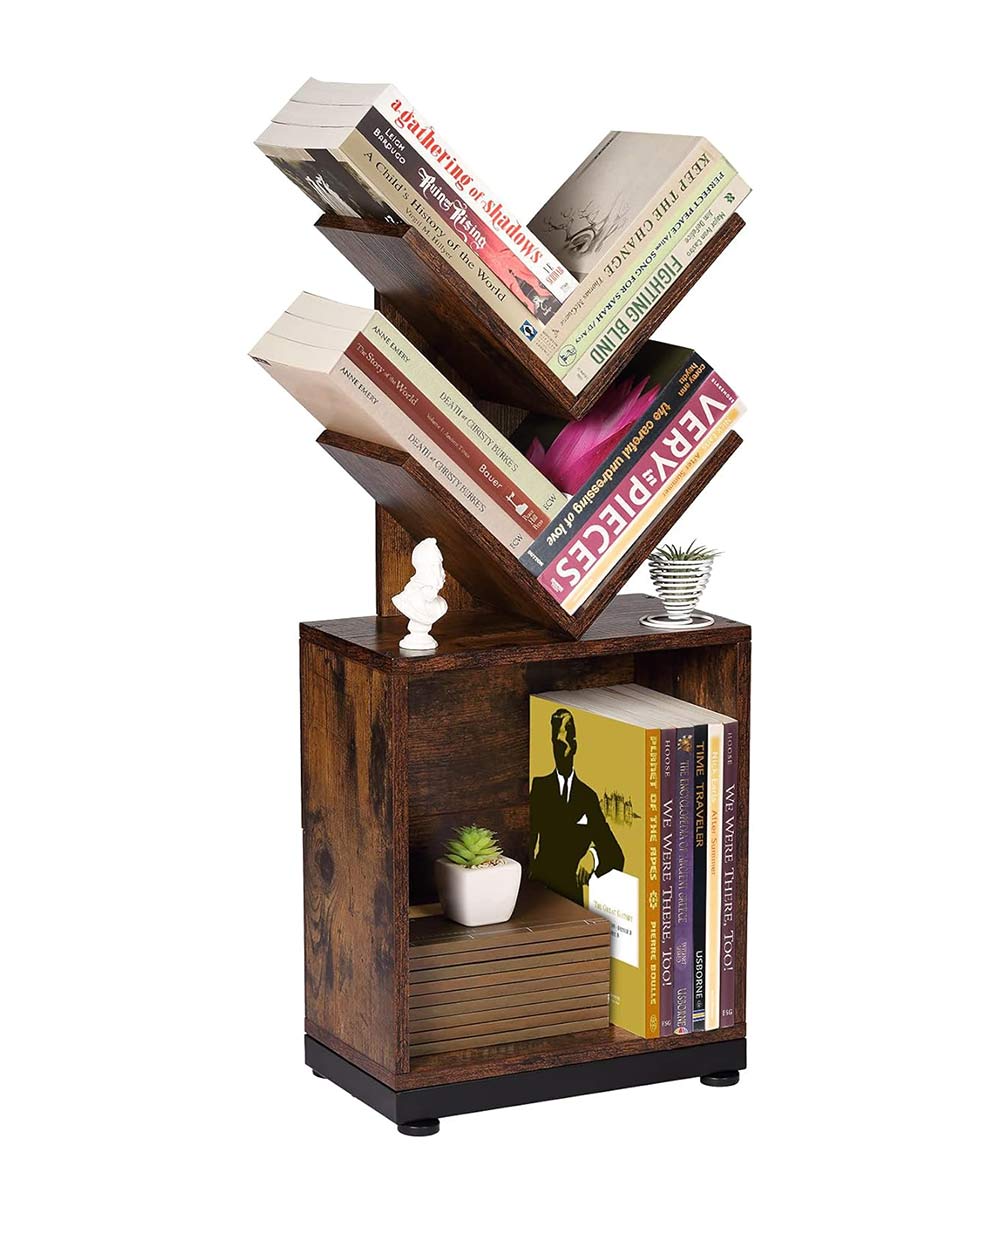 Ruboka 2-Shelf Tree Bookshelf with Storage Rustic Brown